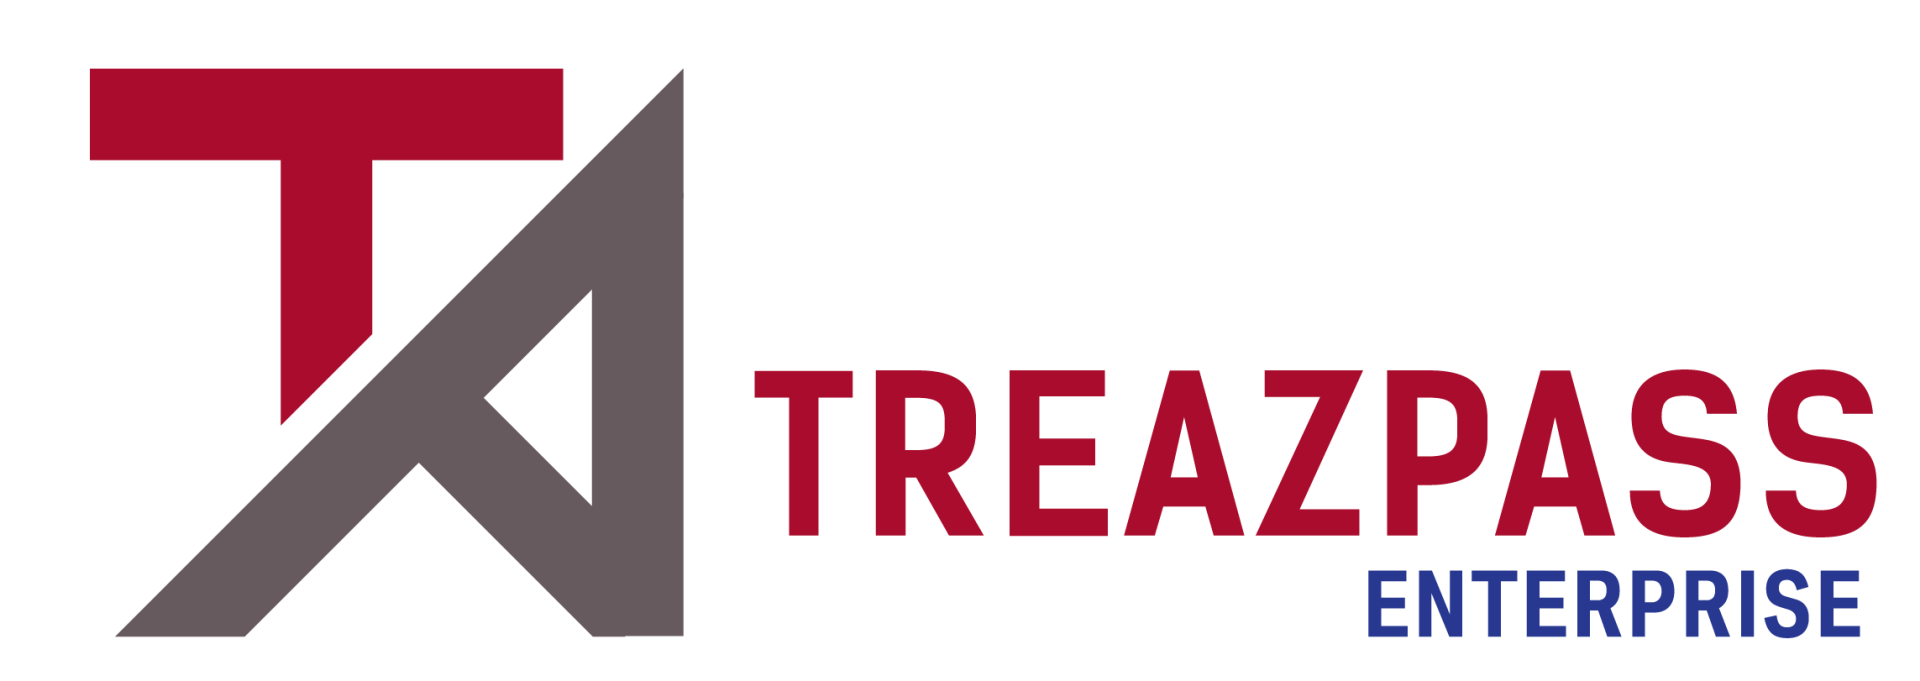 Treazpass